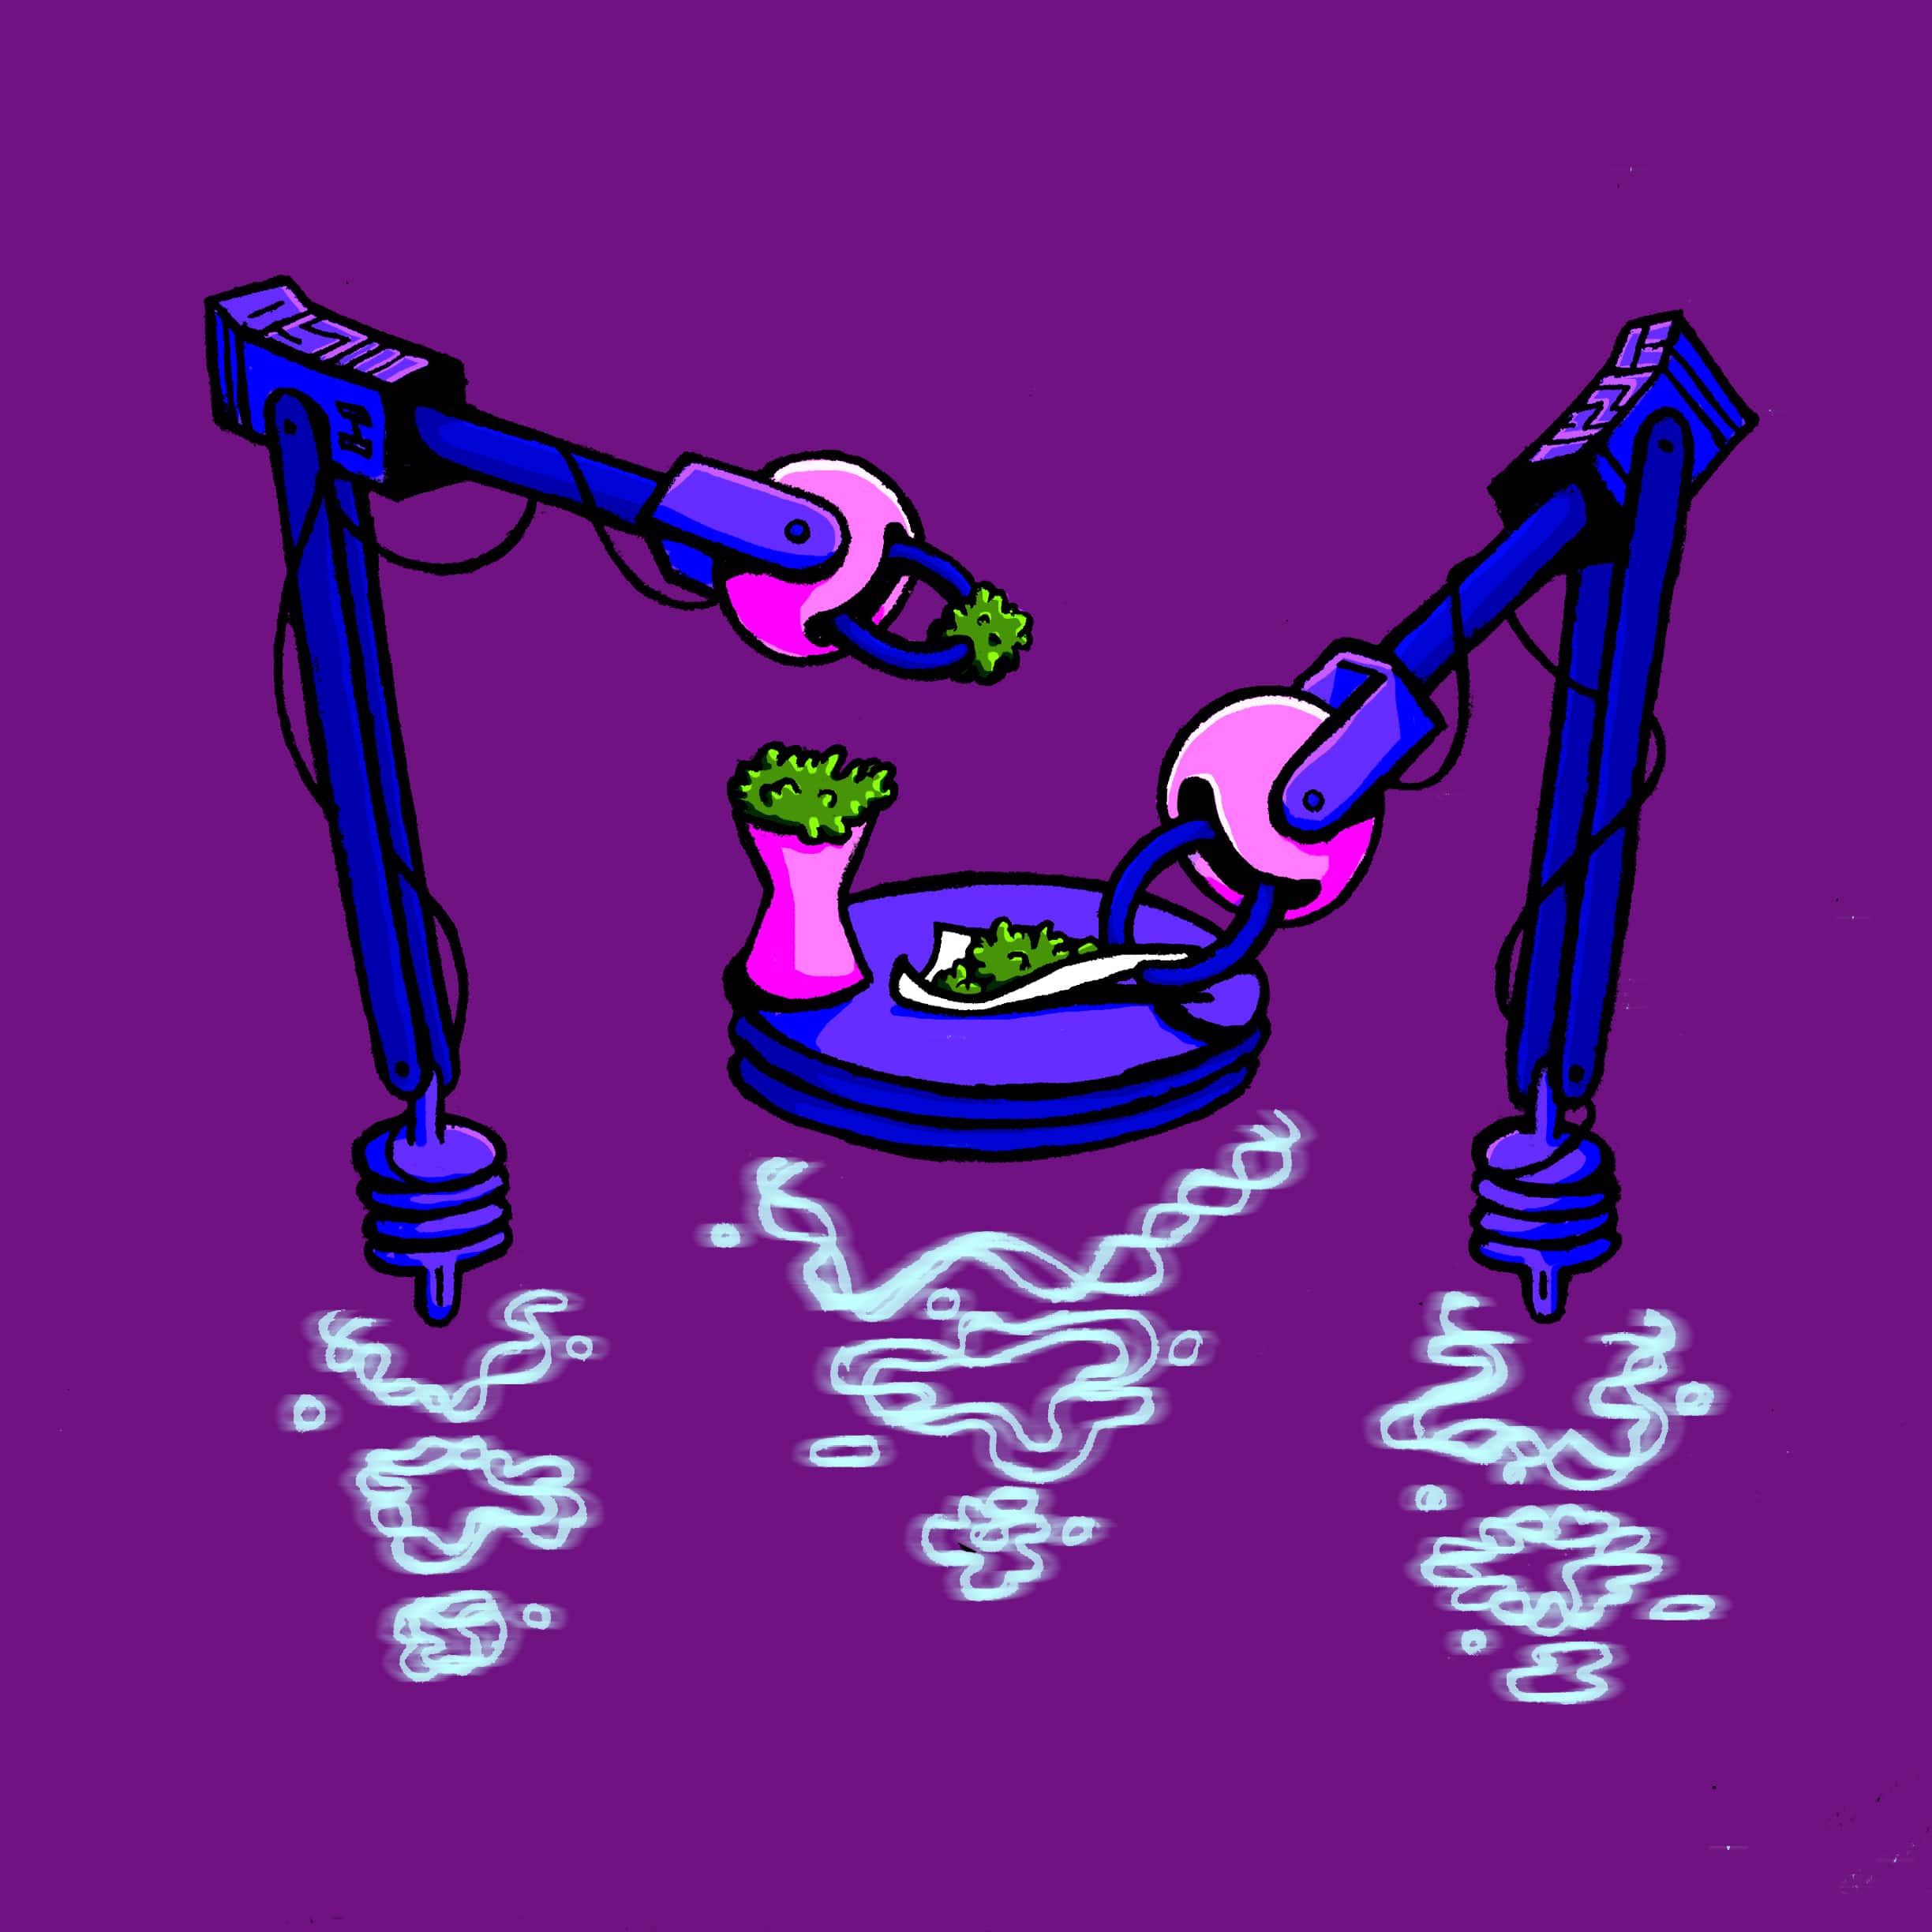 J Bot Joint Rolling Robot illustration by Maximillian Piras